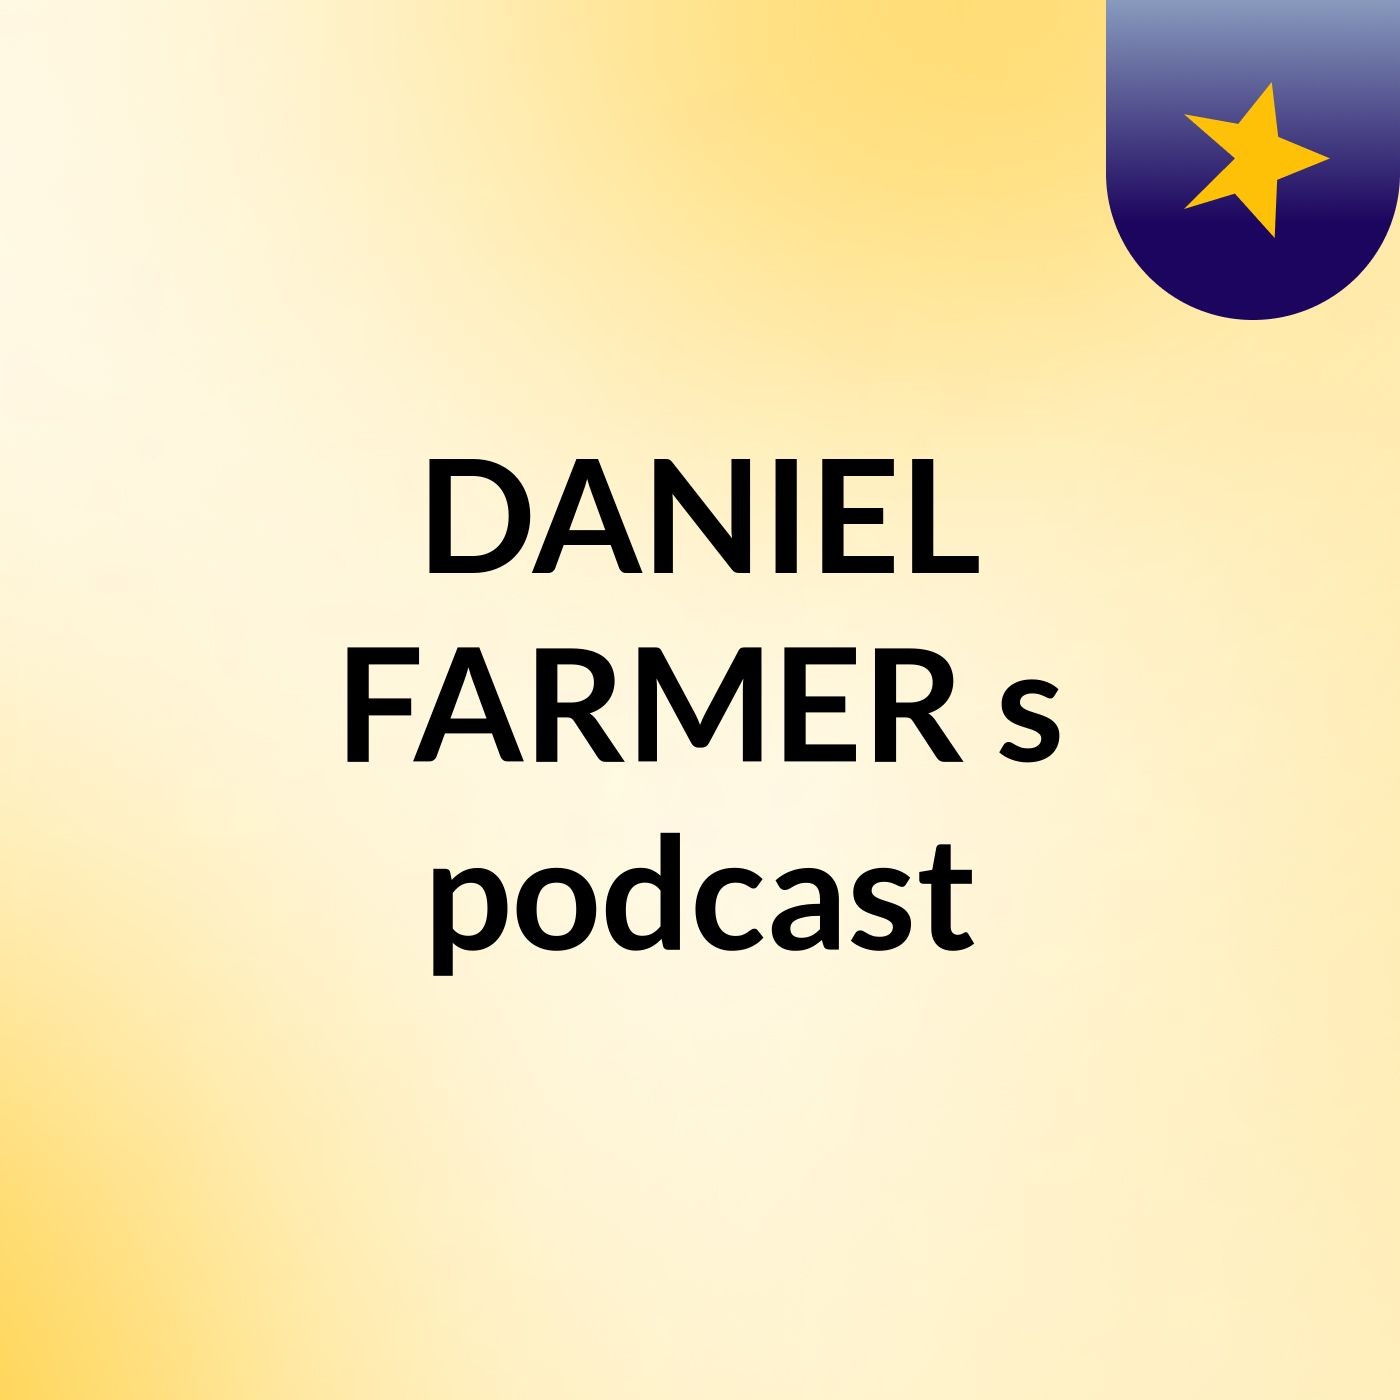 Episode 1 - DANIEL FARMER's podcast